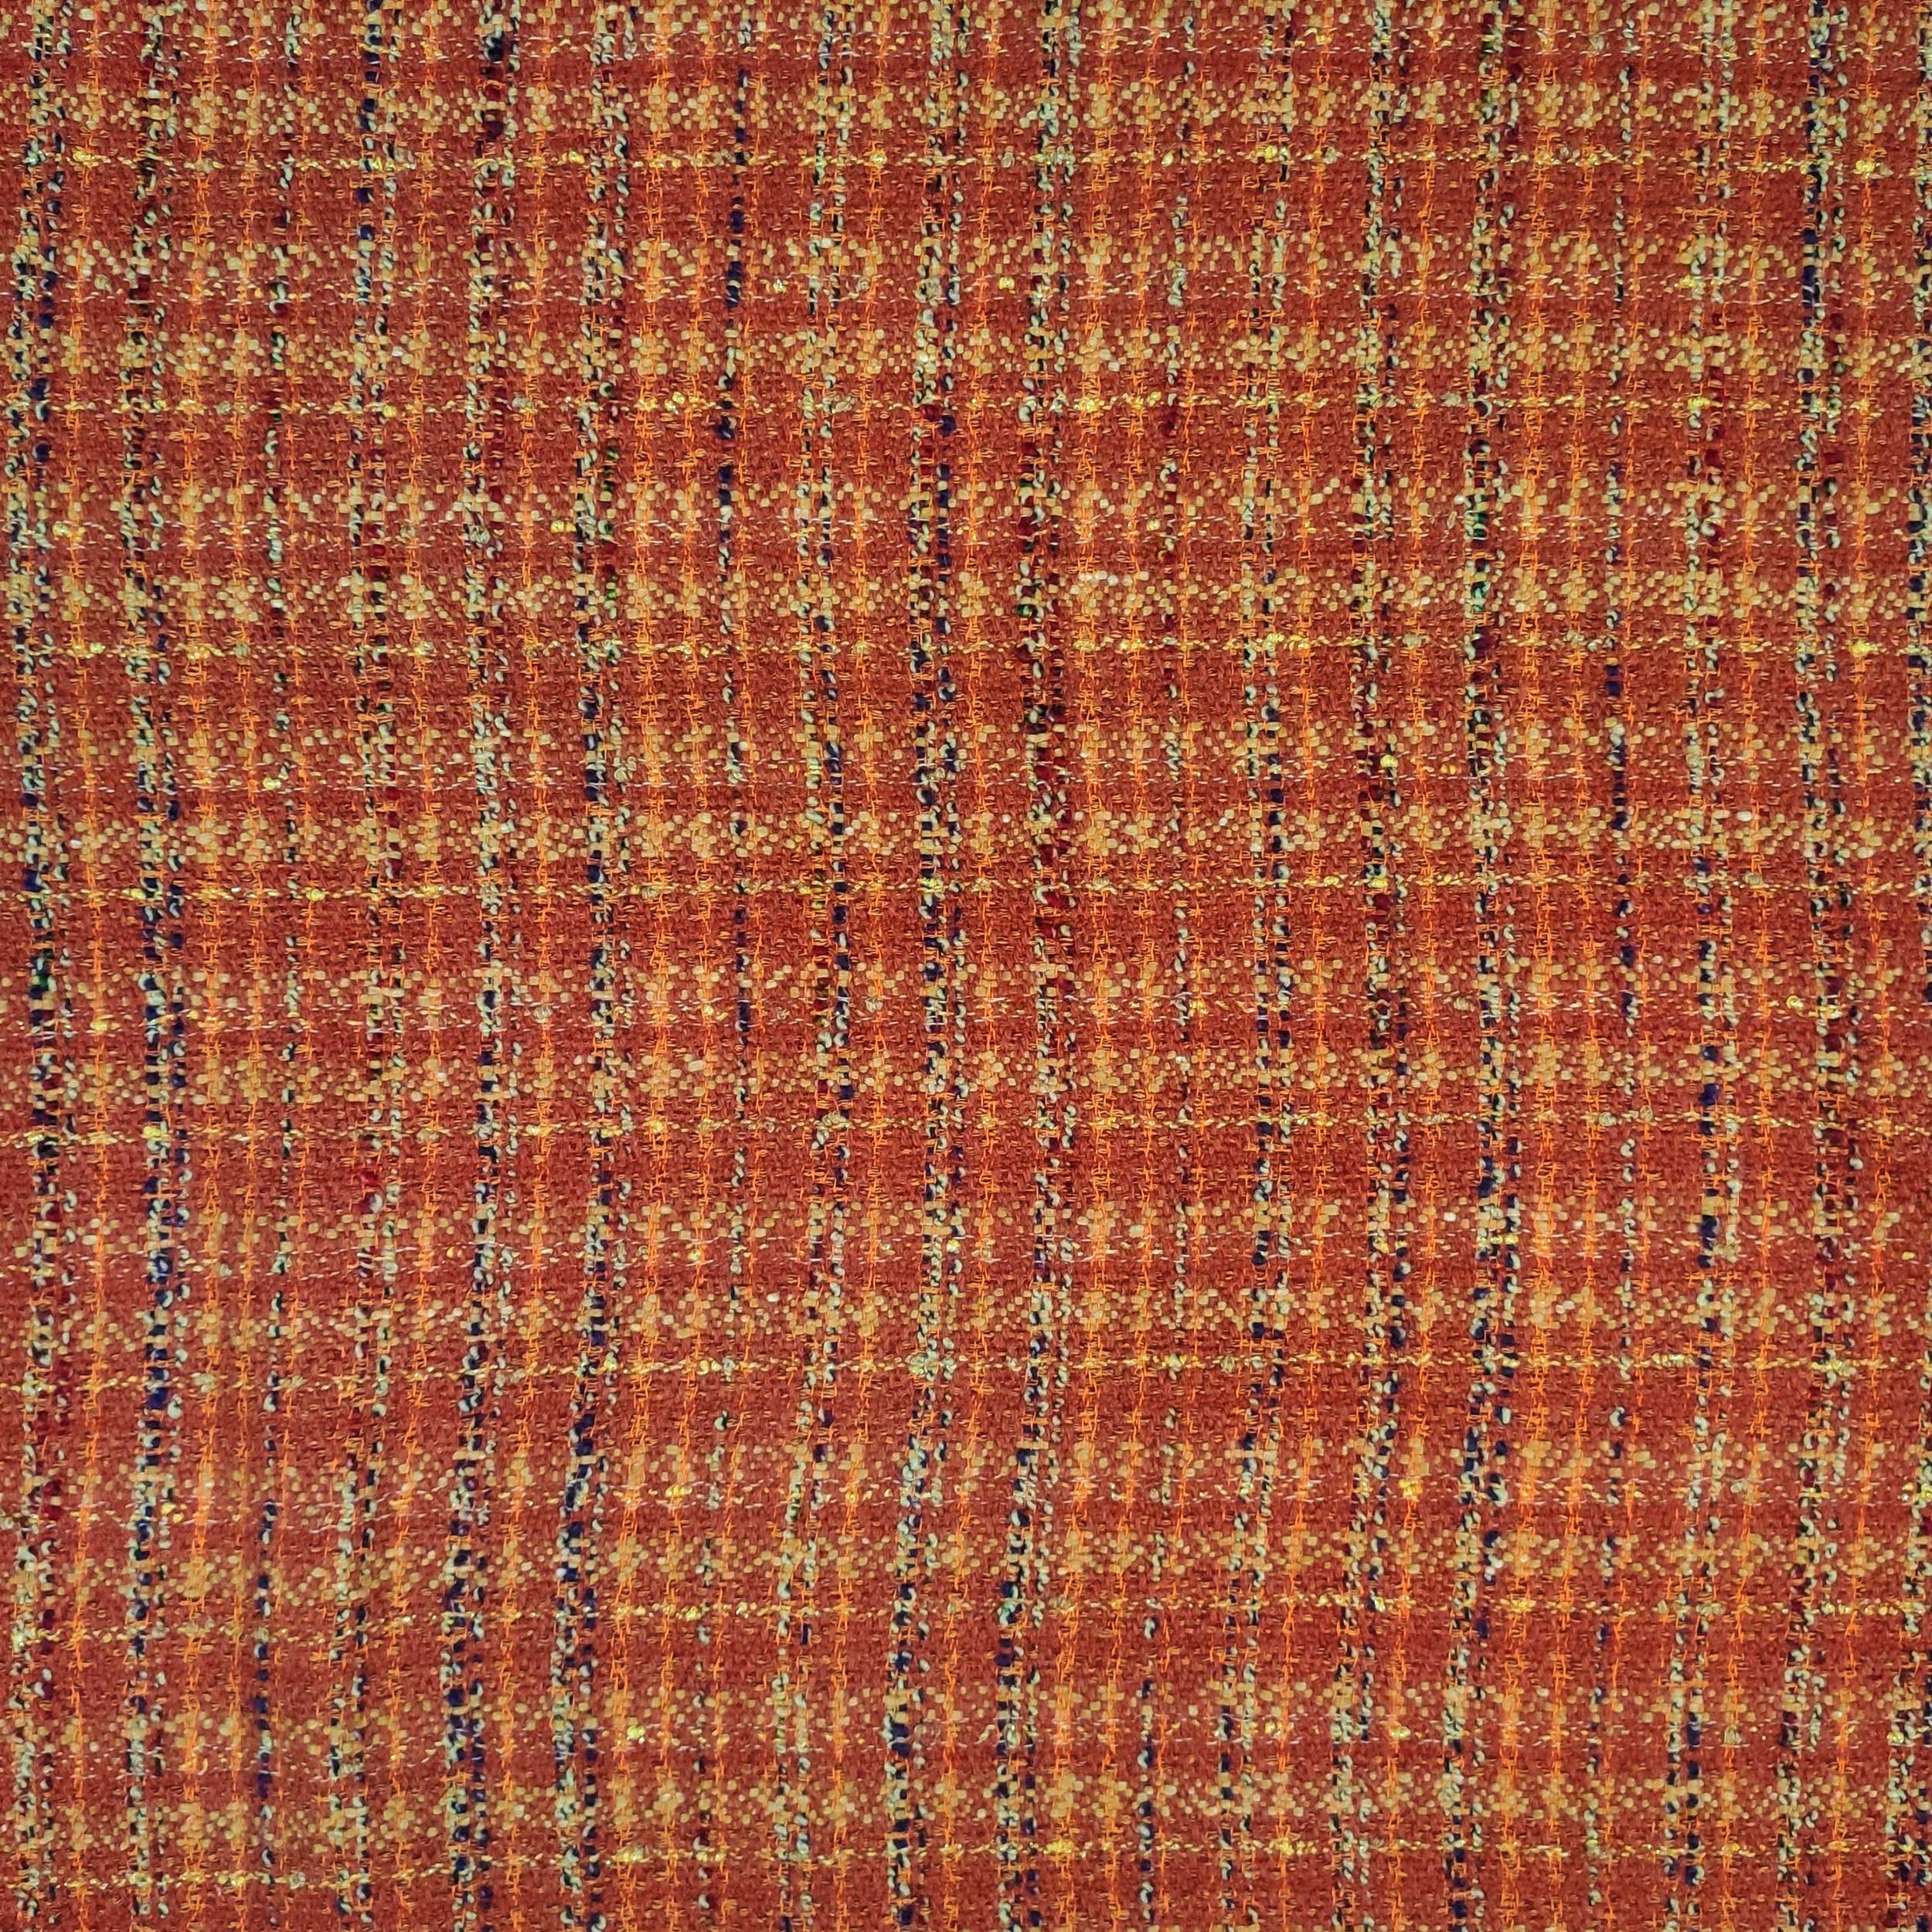 tessuto abbigliametno tweed arancio melange (1)